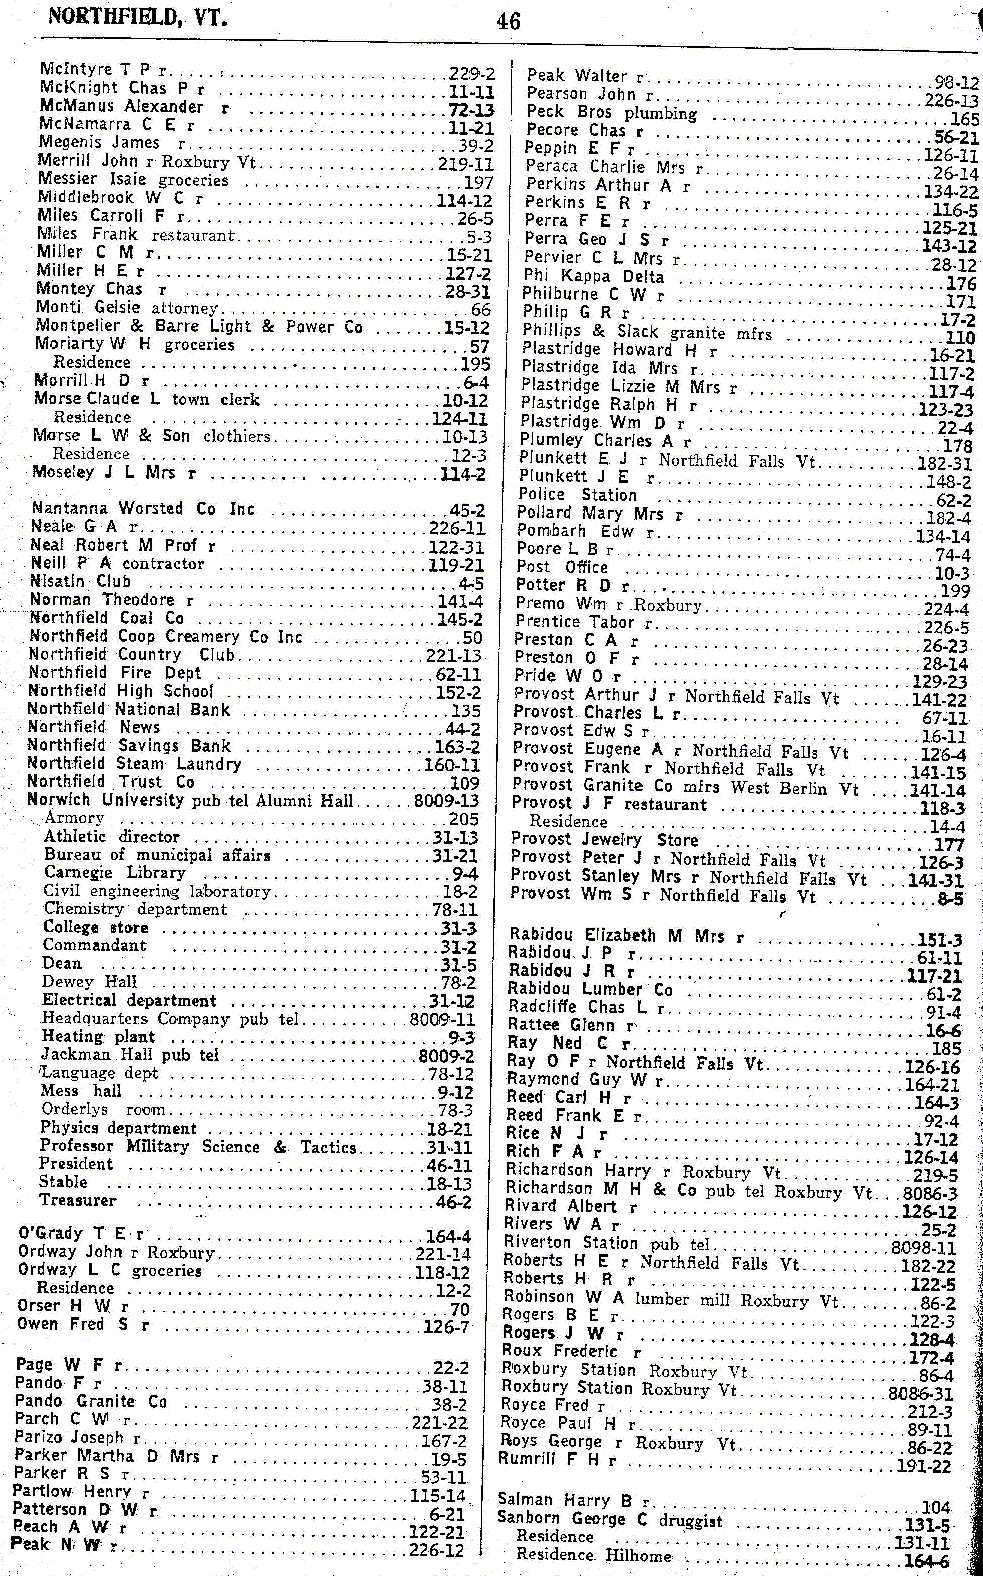 1928 Northfield Vt Telephone Book - Page 46